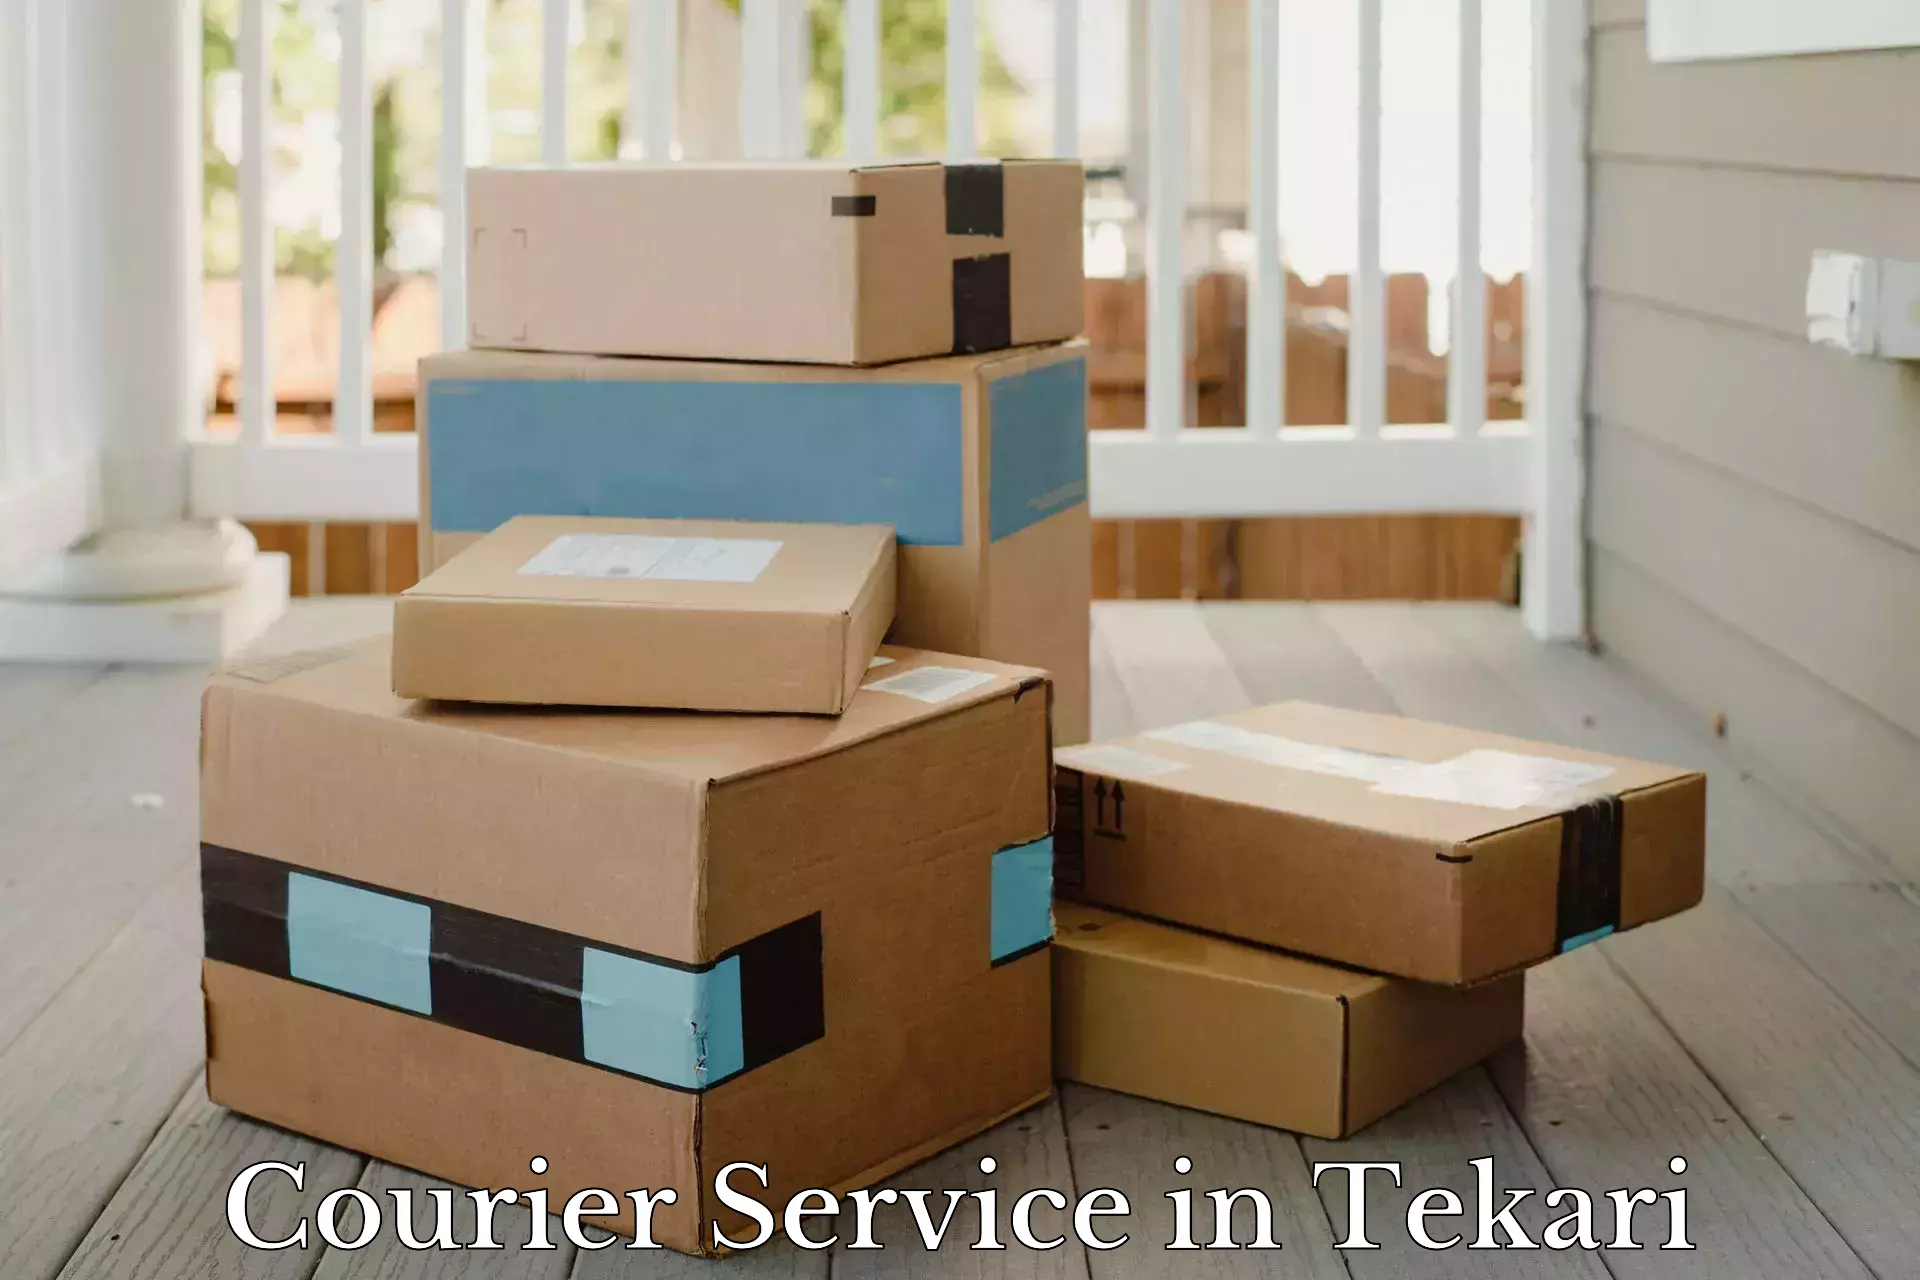 Efficient freight service in Tekari